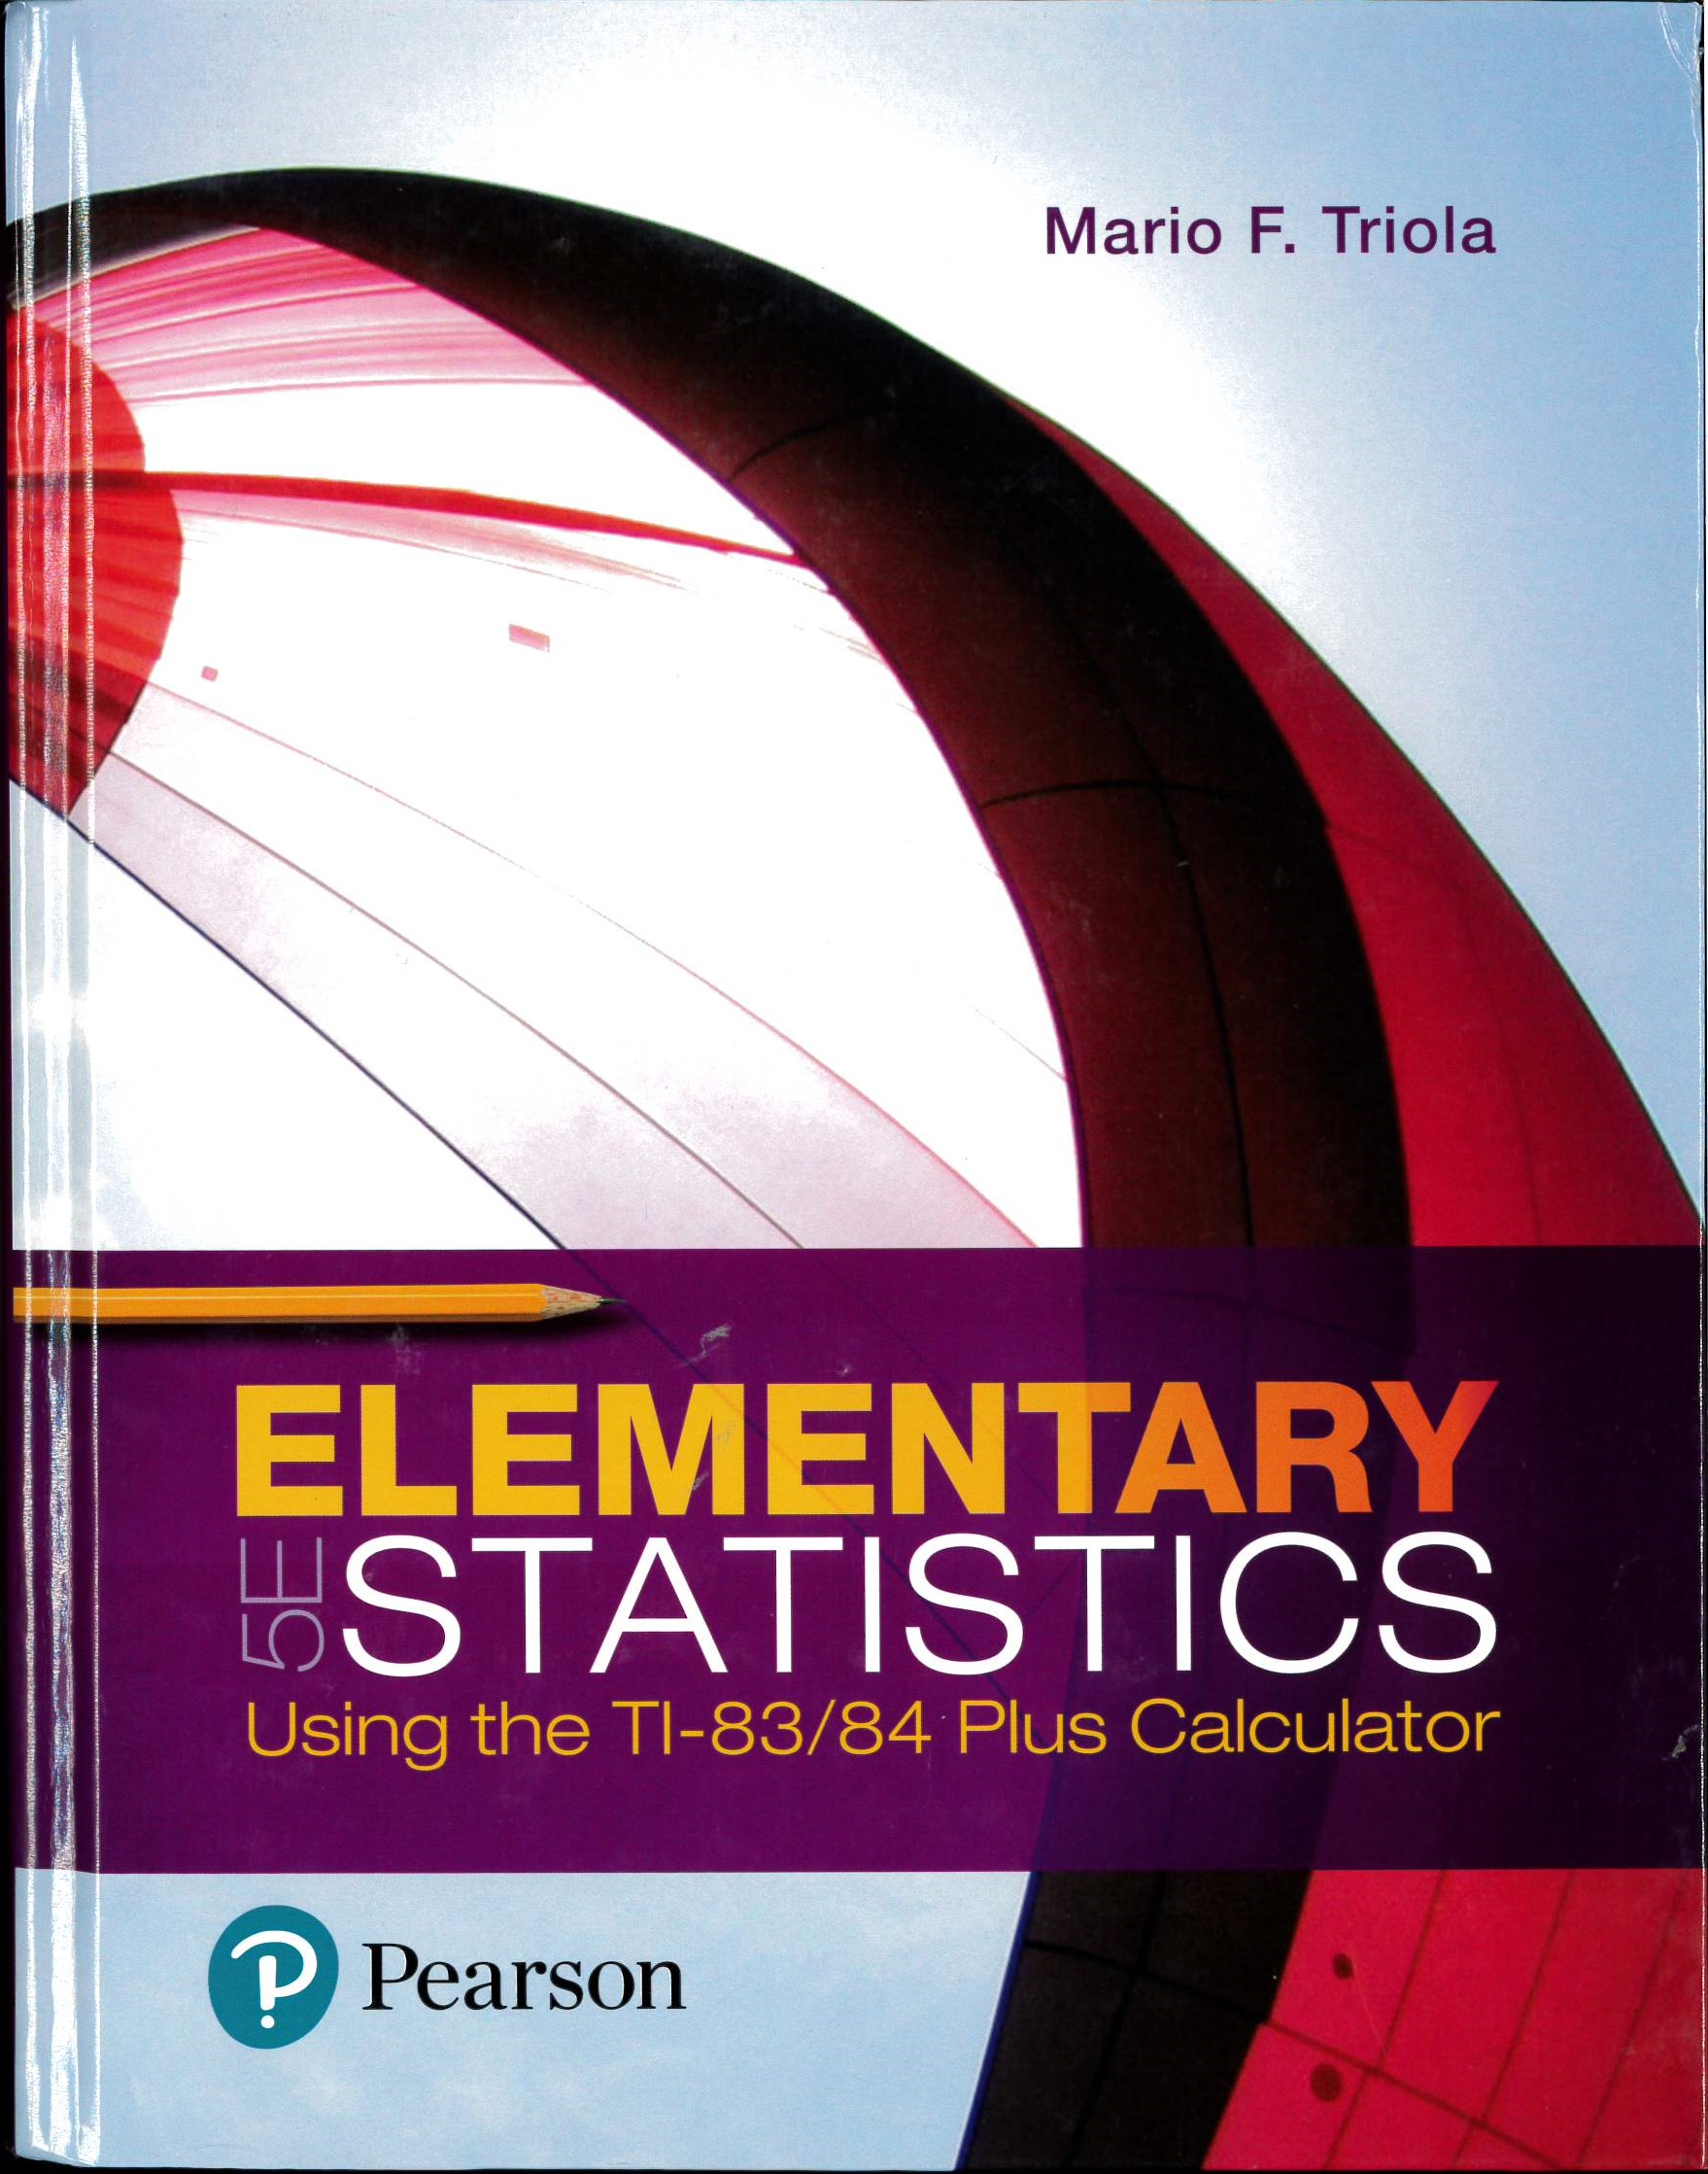 Elementary statistics using the TI-83/84 plus calculator